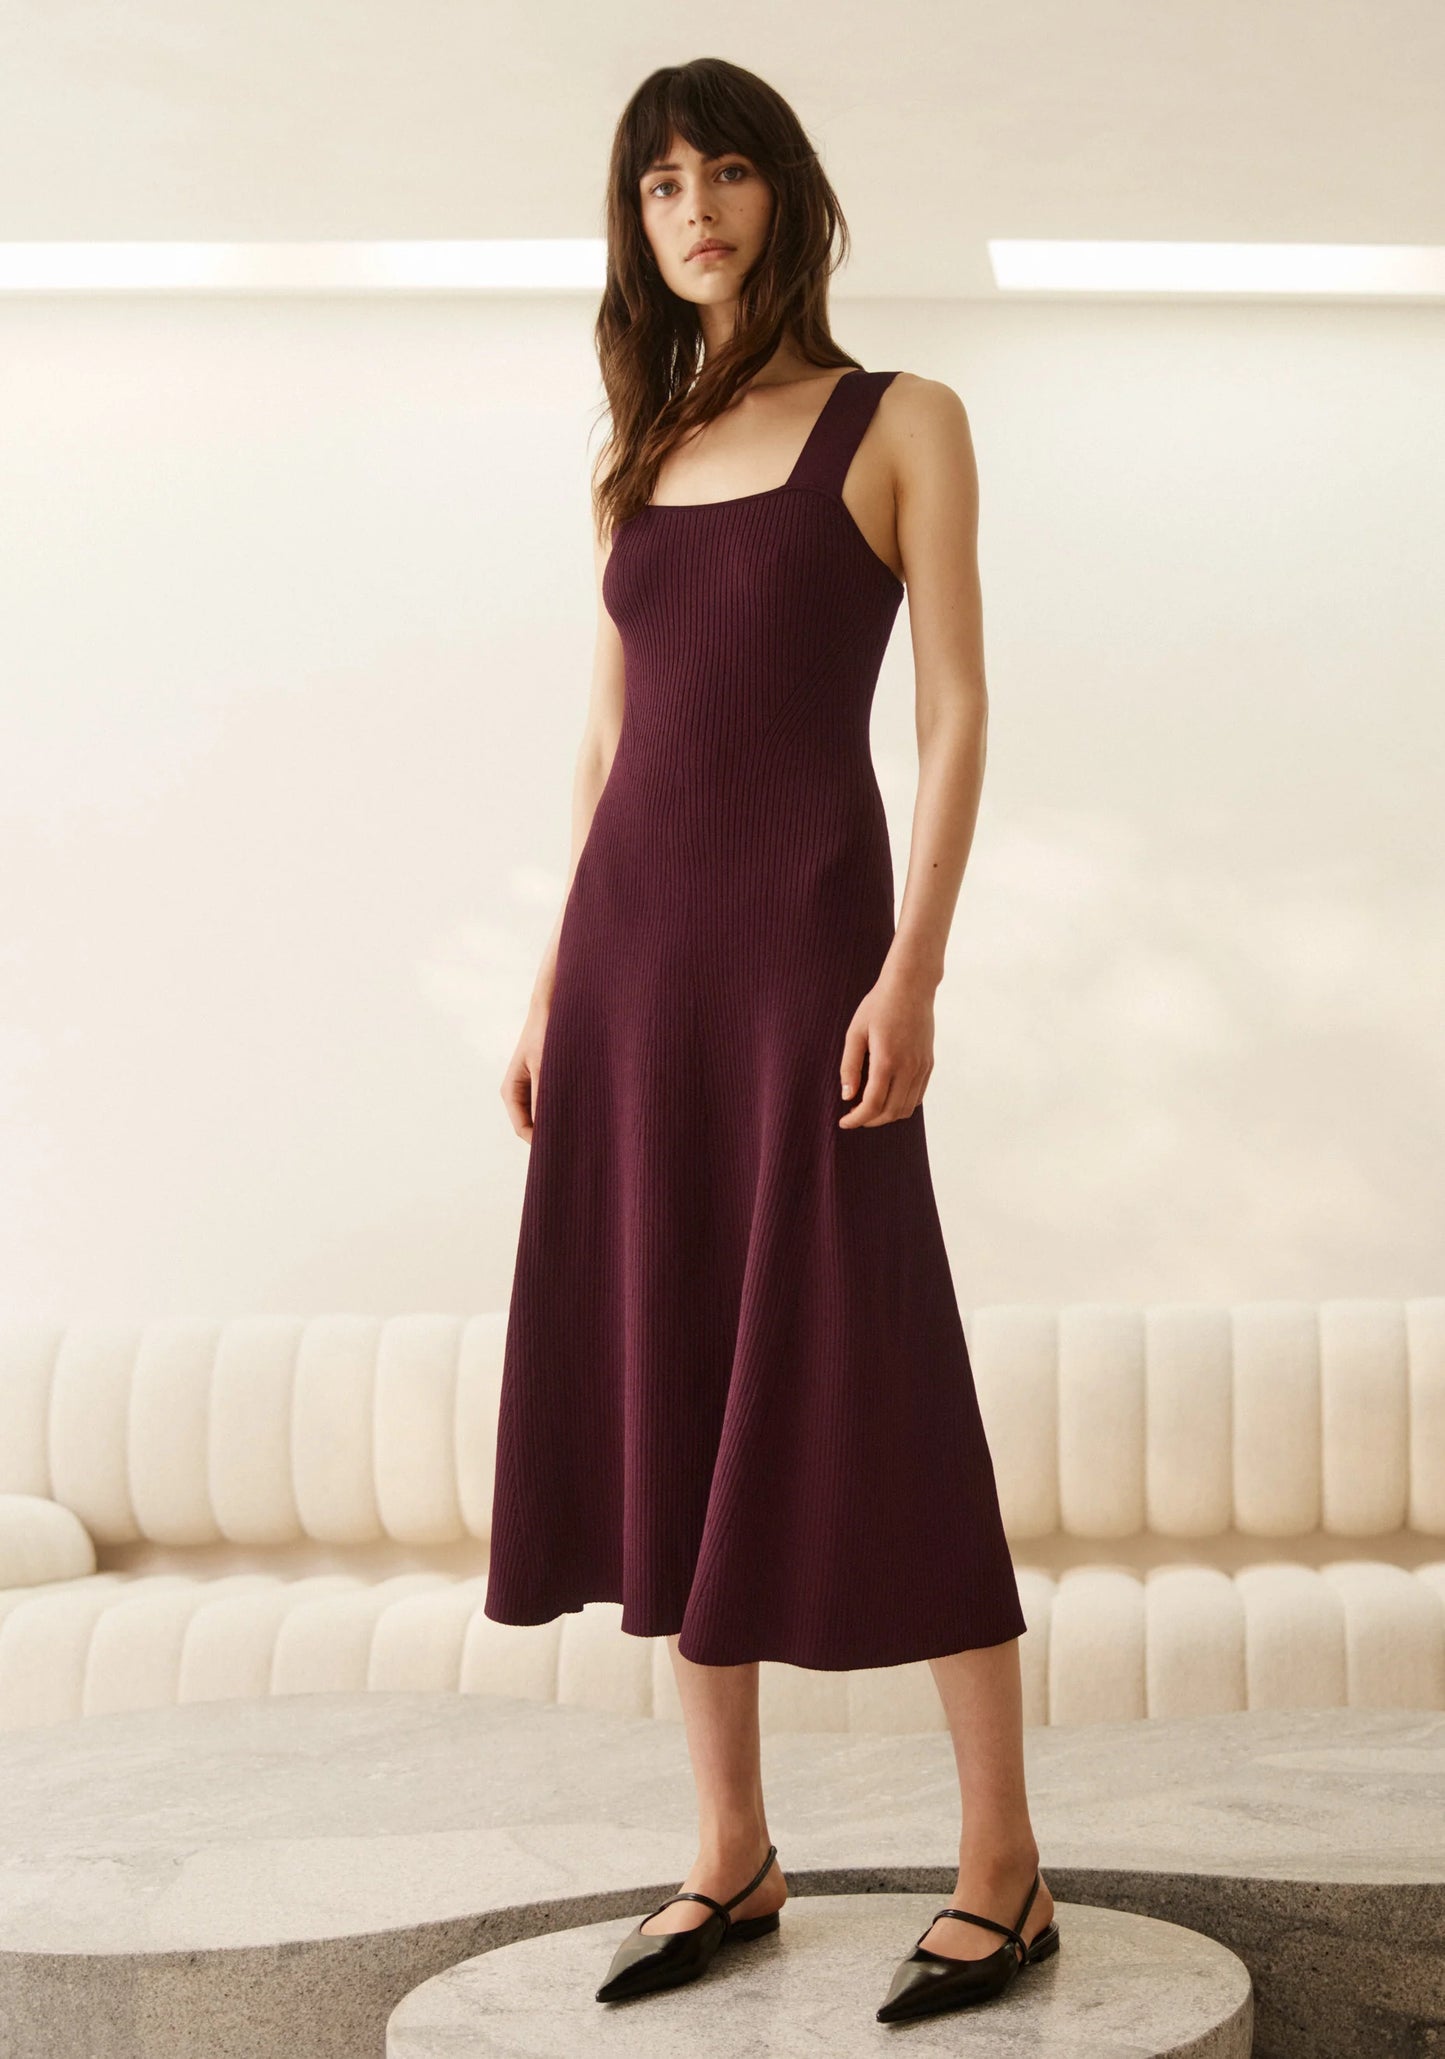 Morrison Sloane Knit Dress